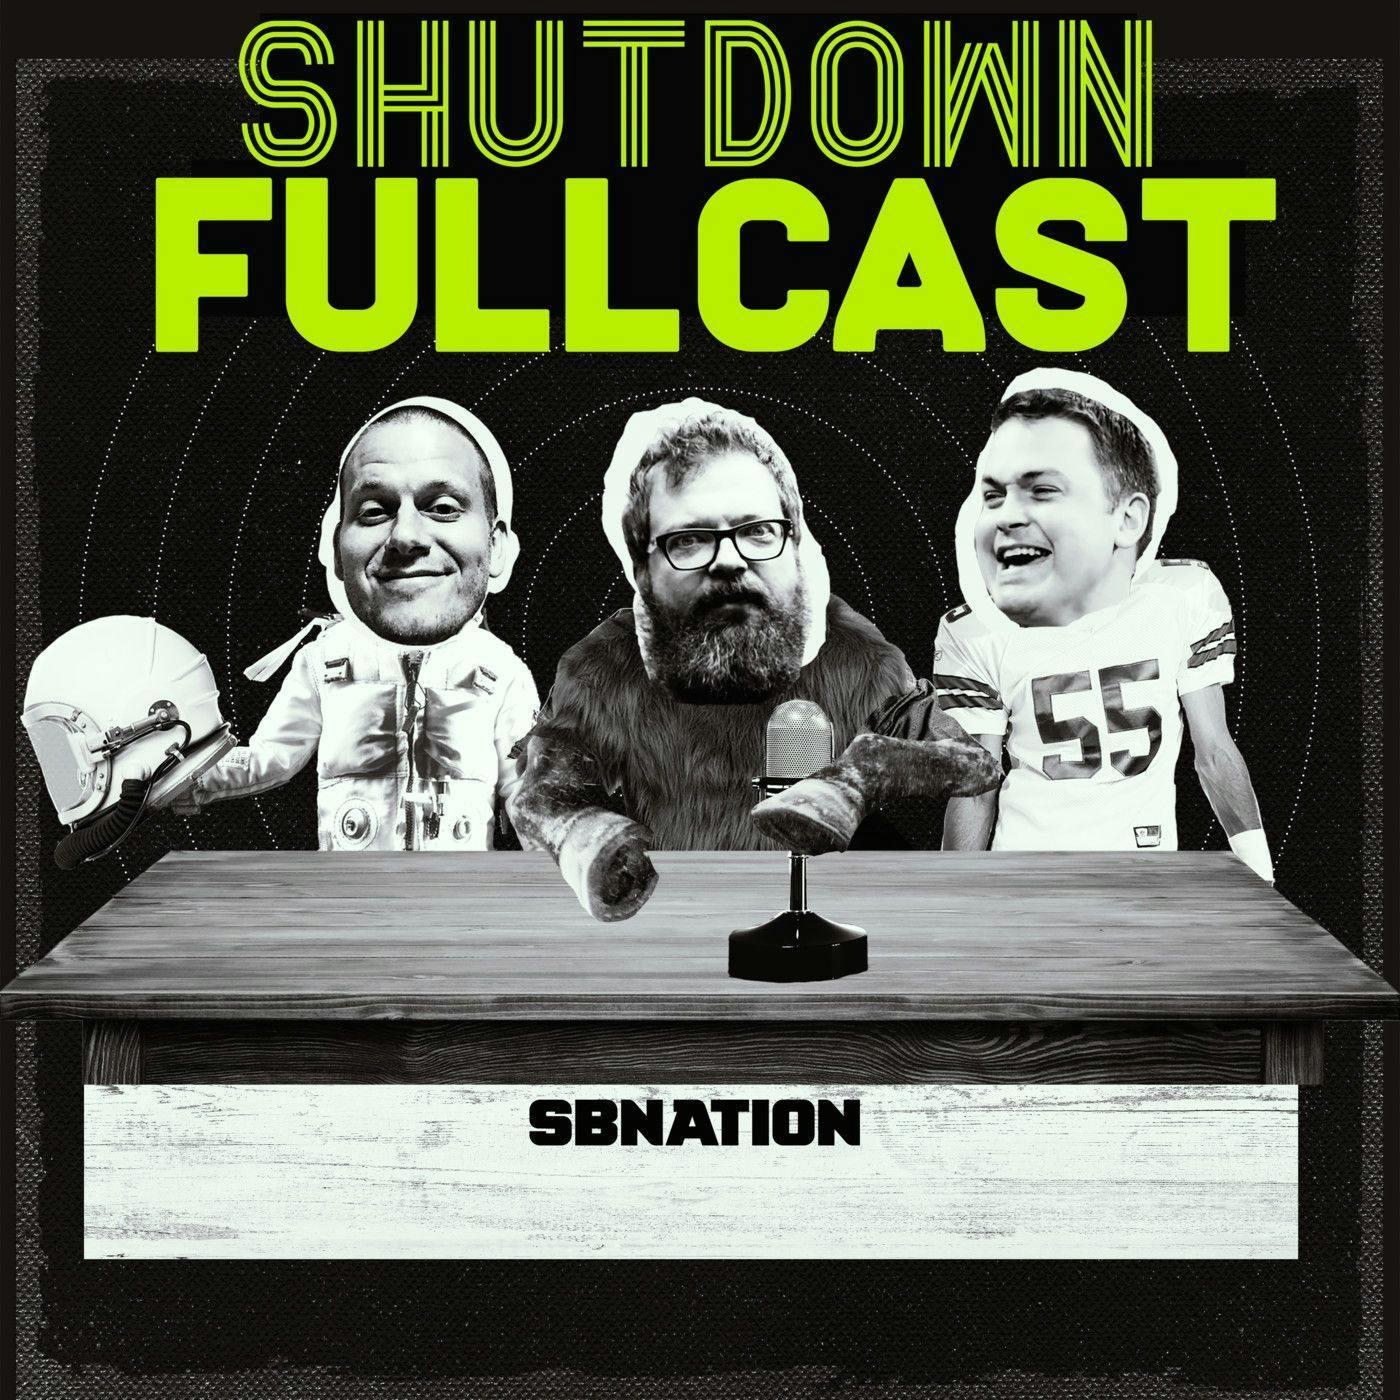 Shutdown Fullcast 40 for 40: Nick Saban Has Failed The Gaming Community